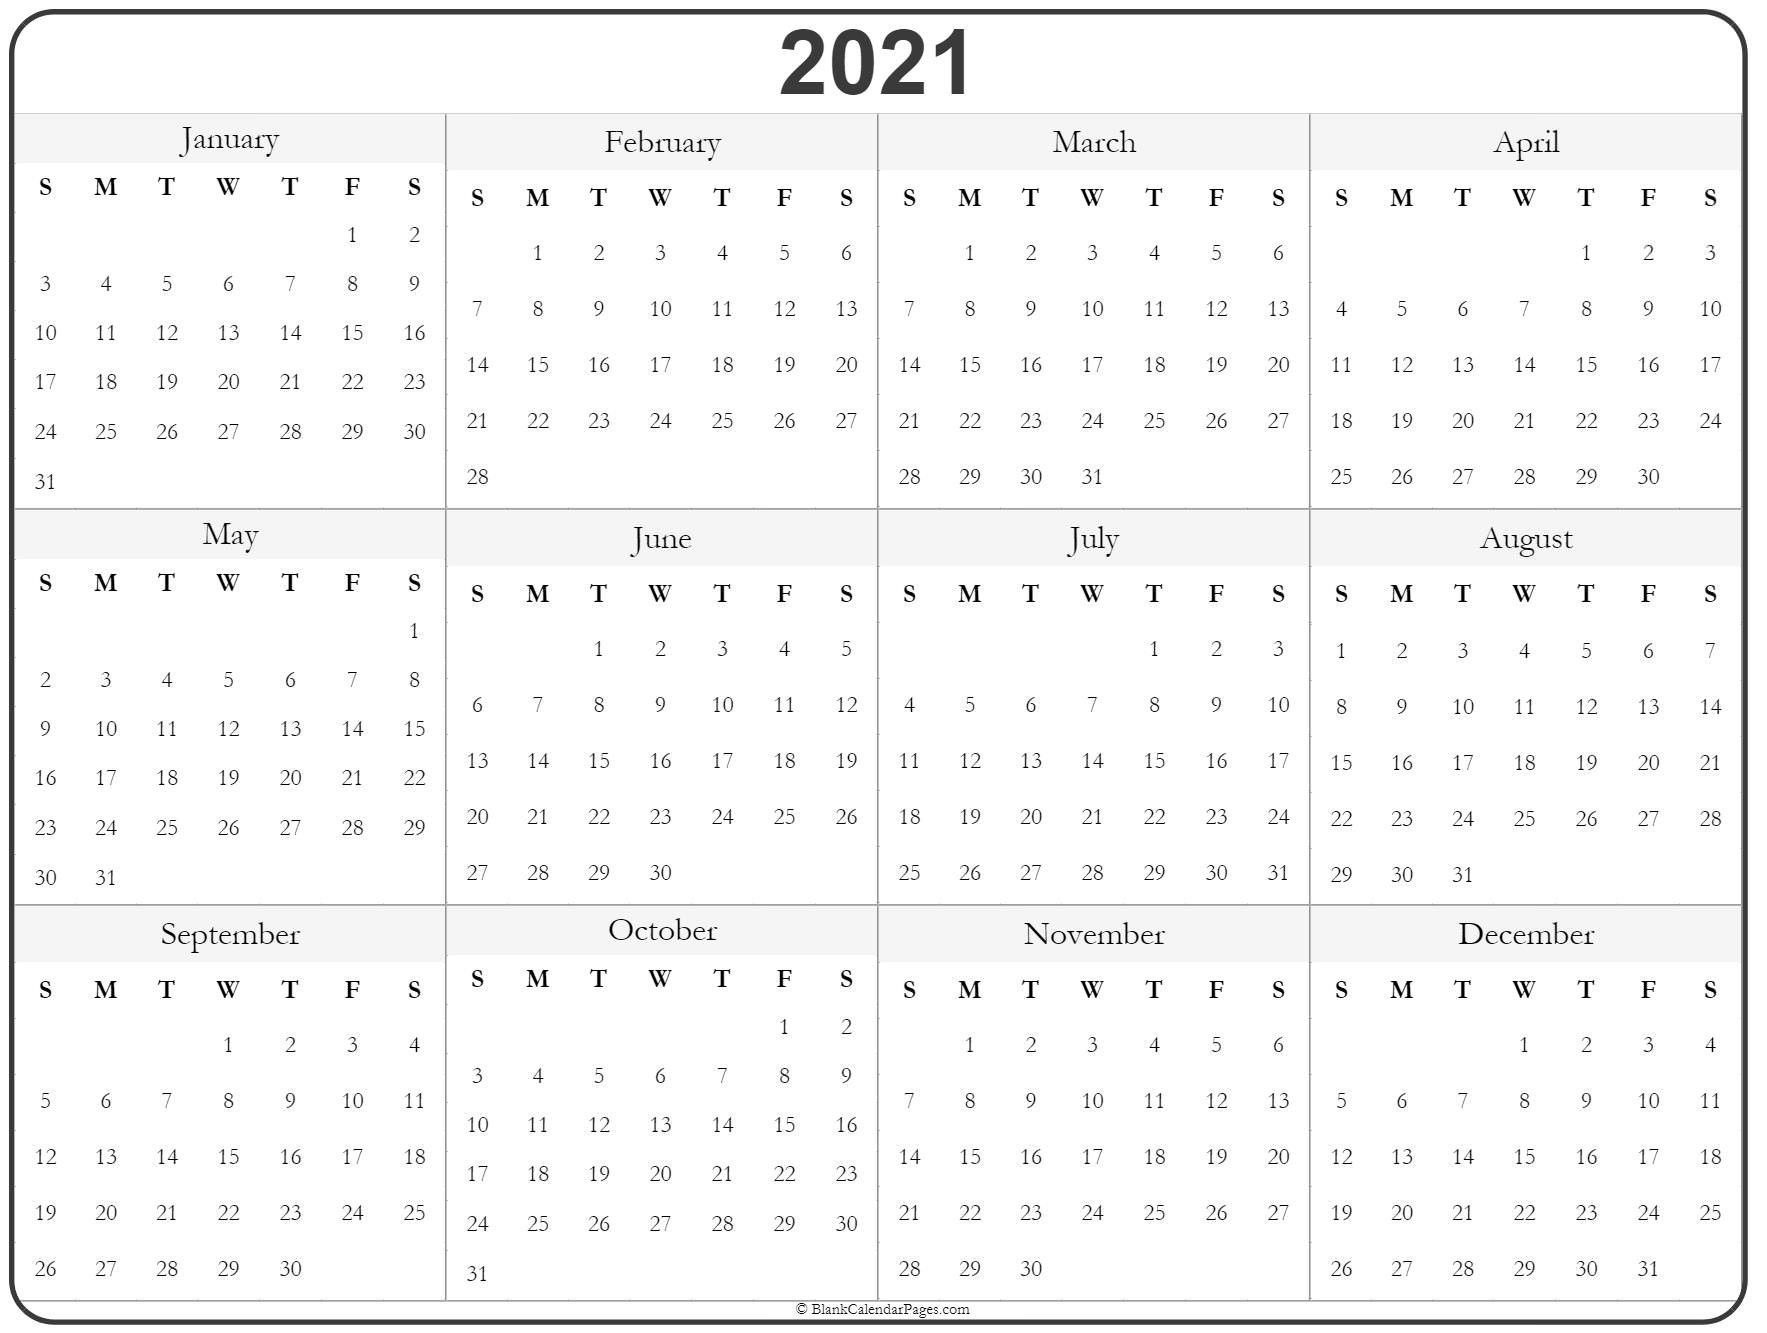 Get Google Calendar 2021 Printable